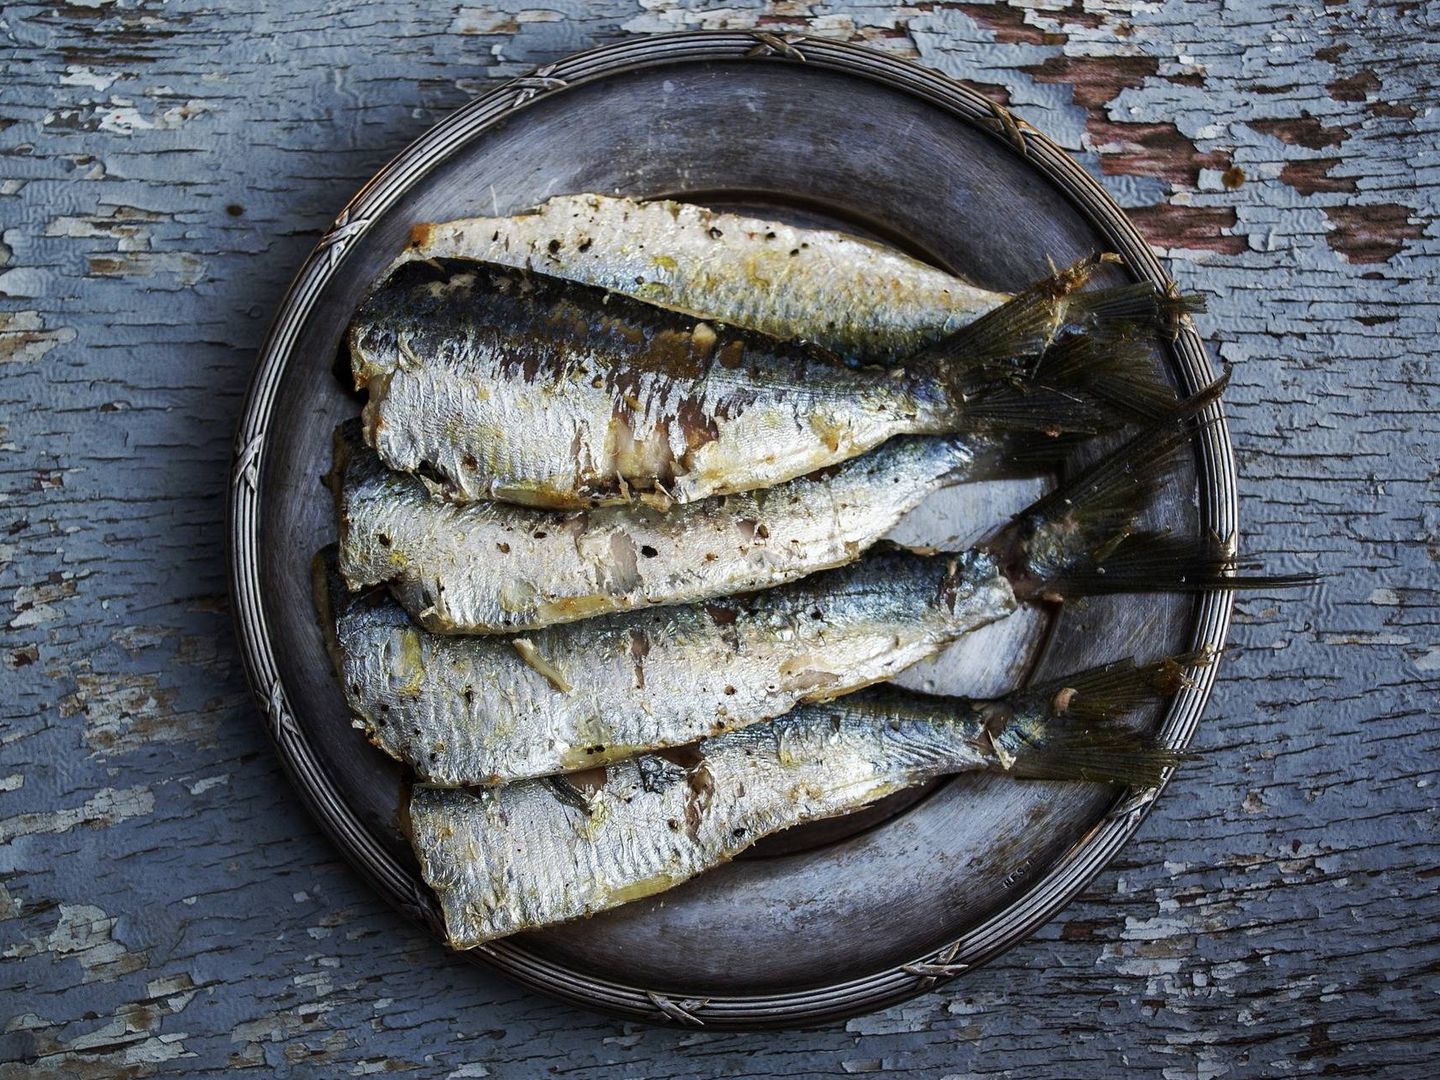 Sardinas, pescado azul de los superalimentos (Pixabay).